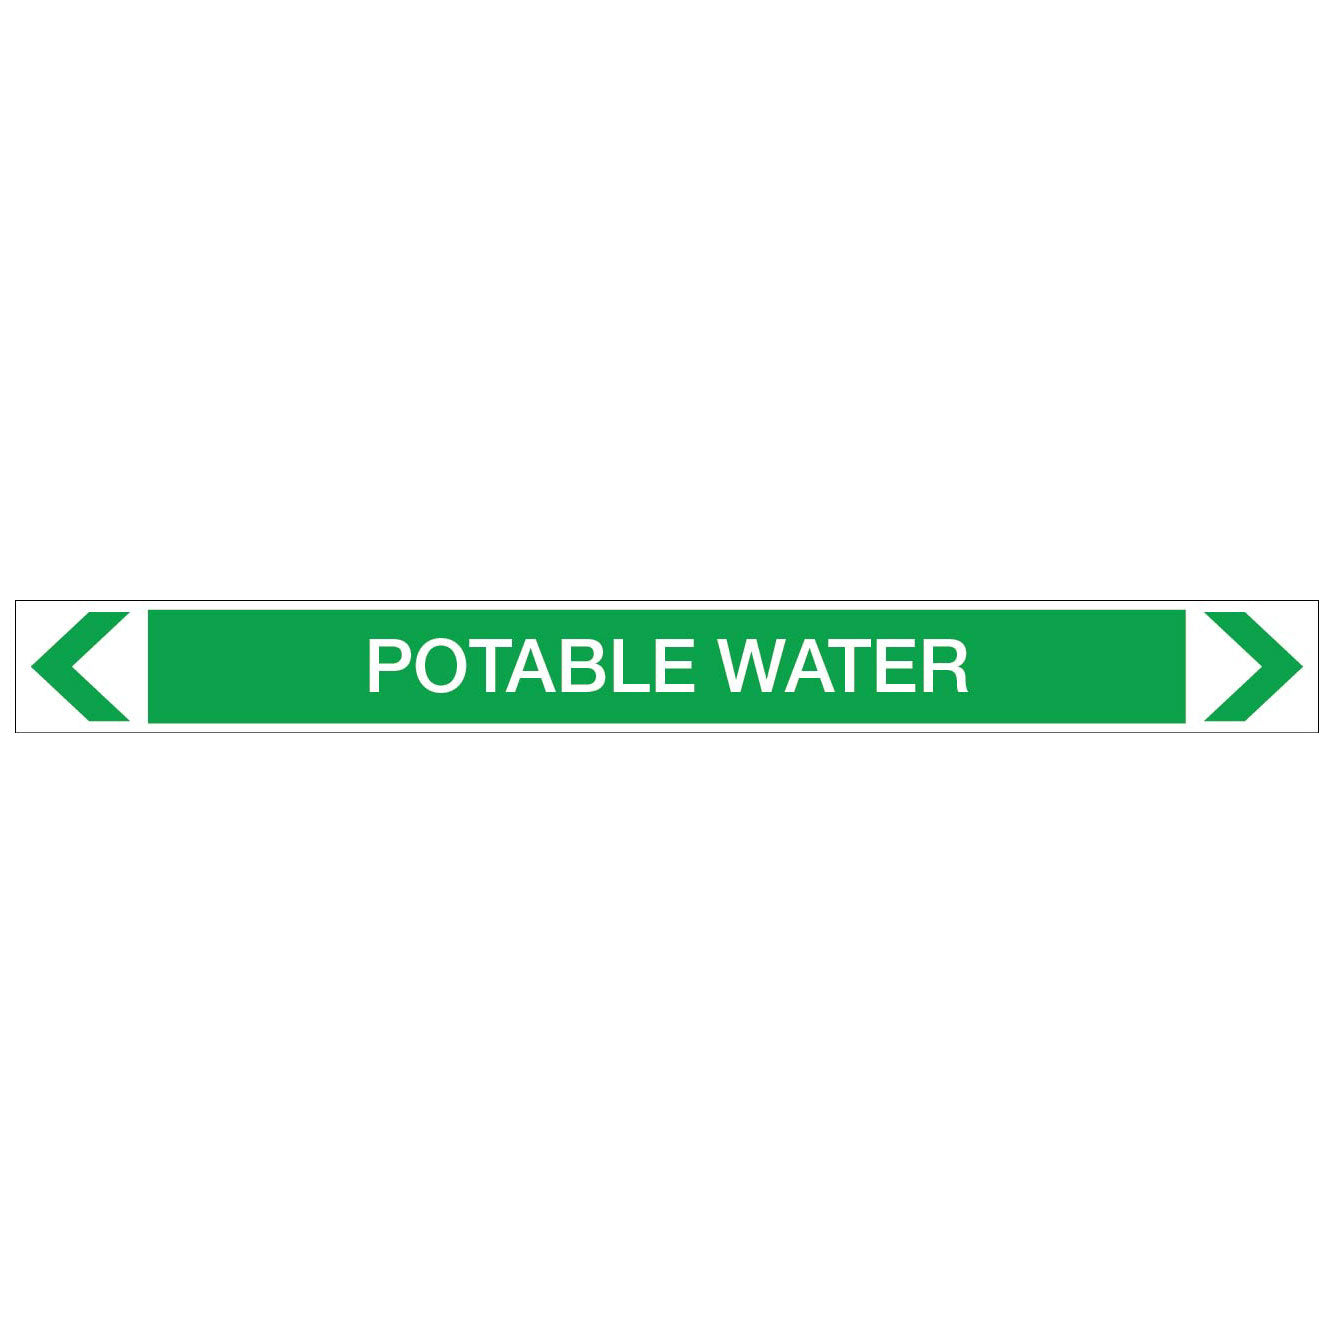 Water - Potable Water - Pipe Marker Sticker